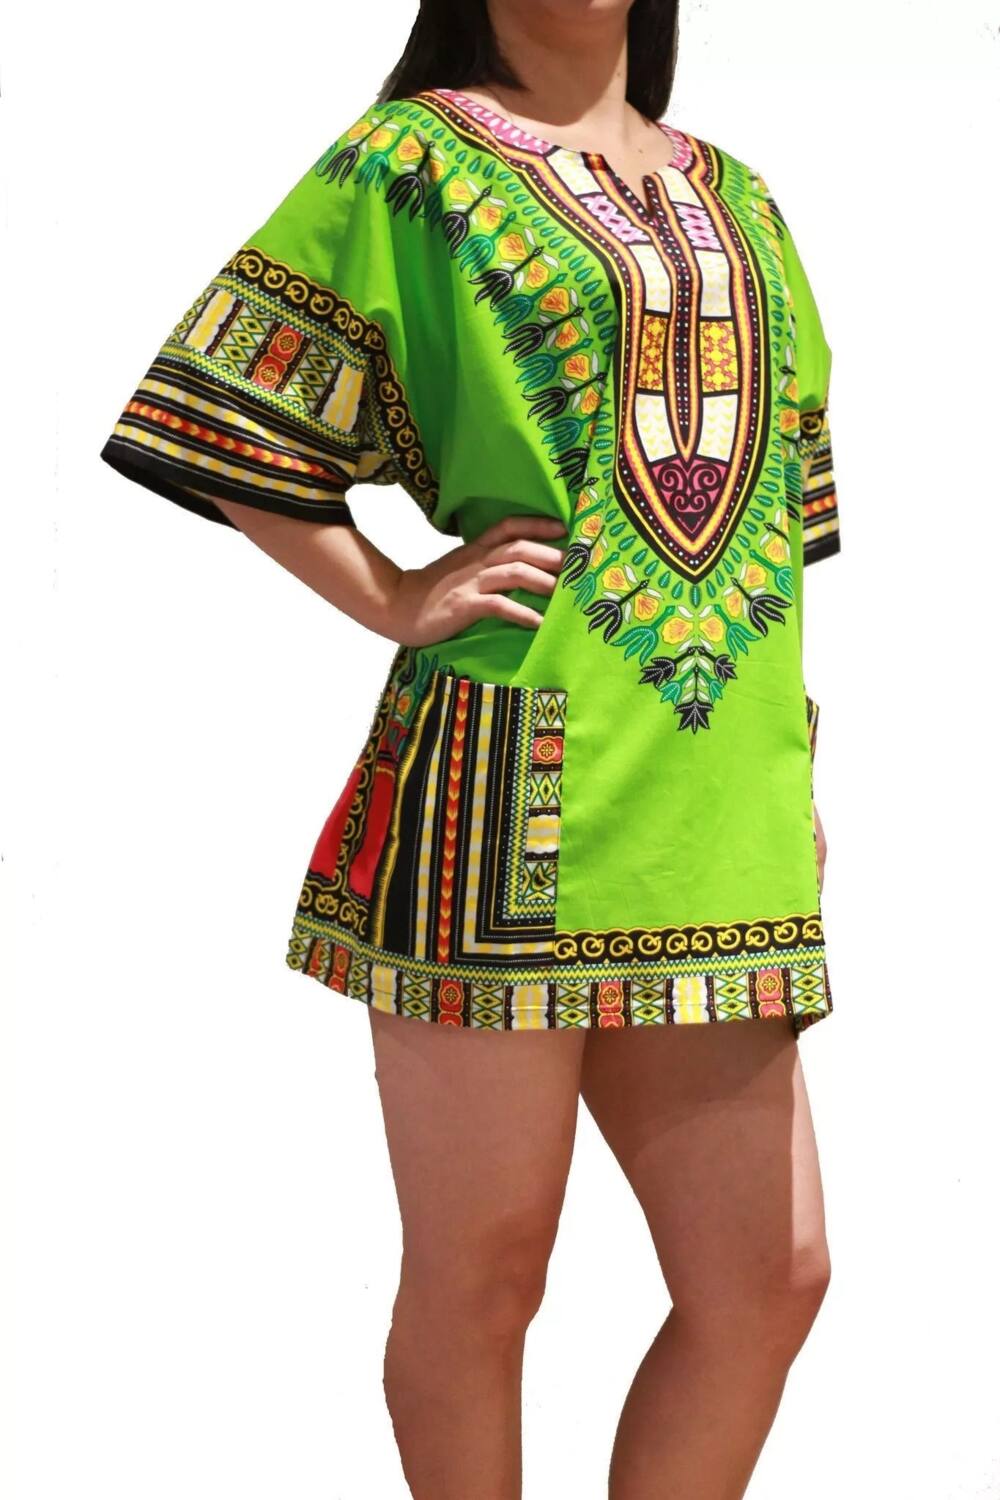 Top dashiki shirt designs for women